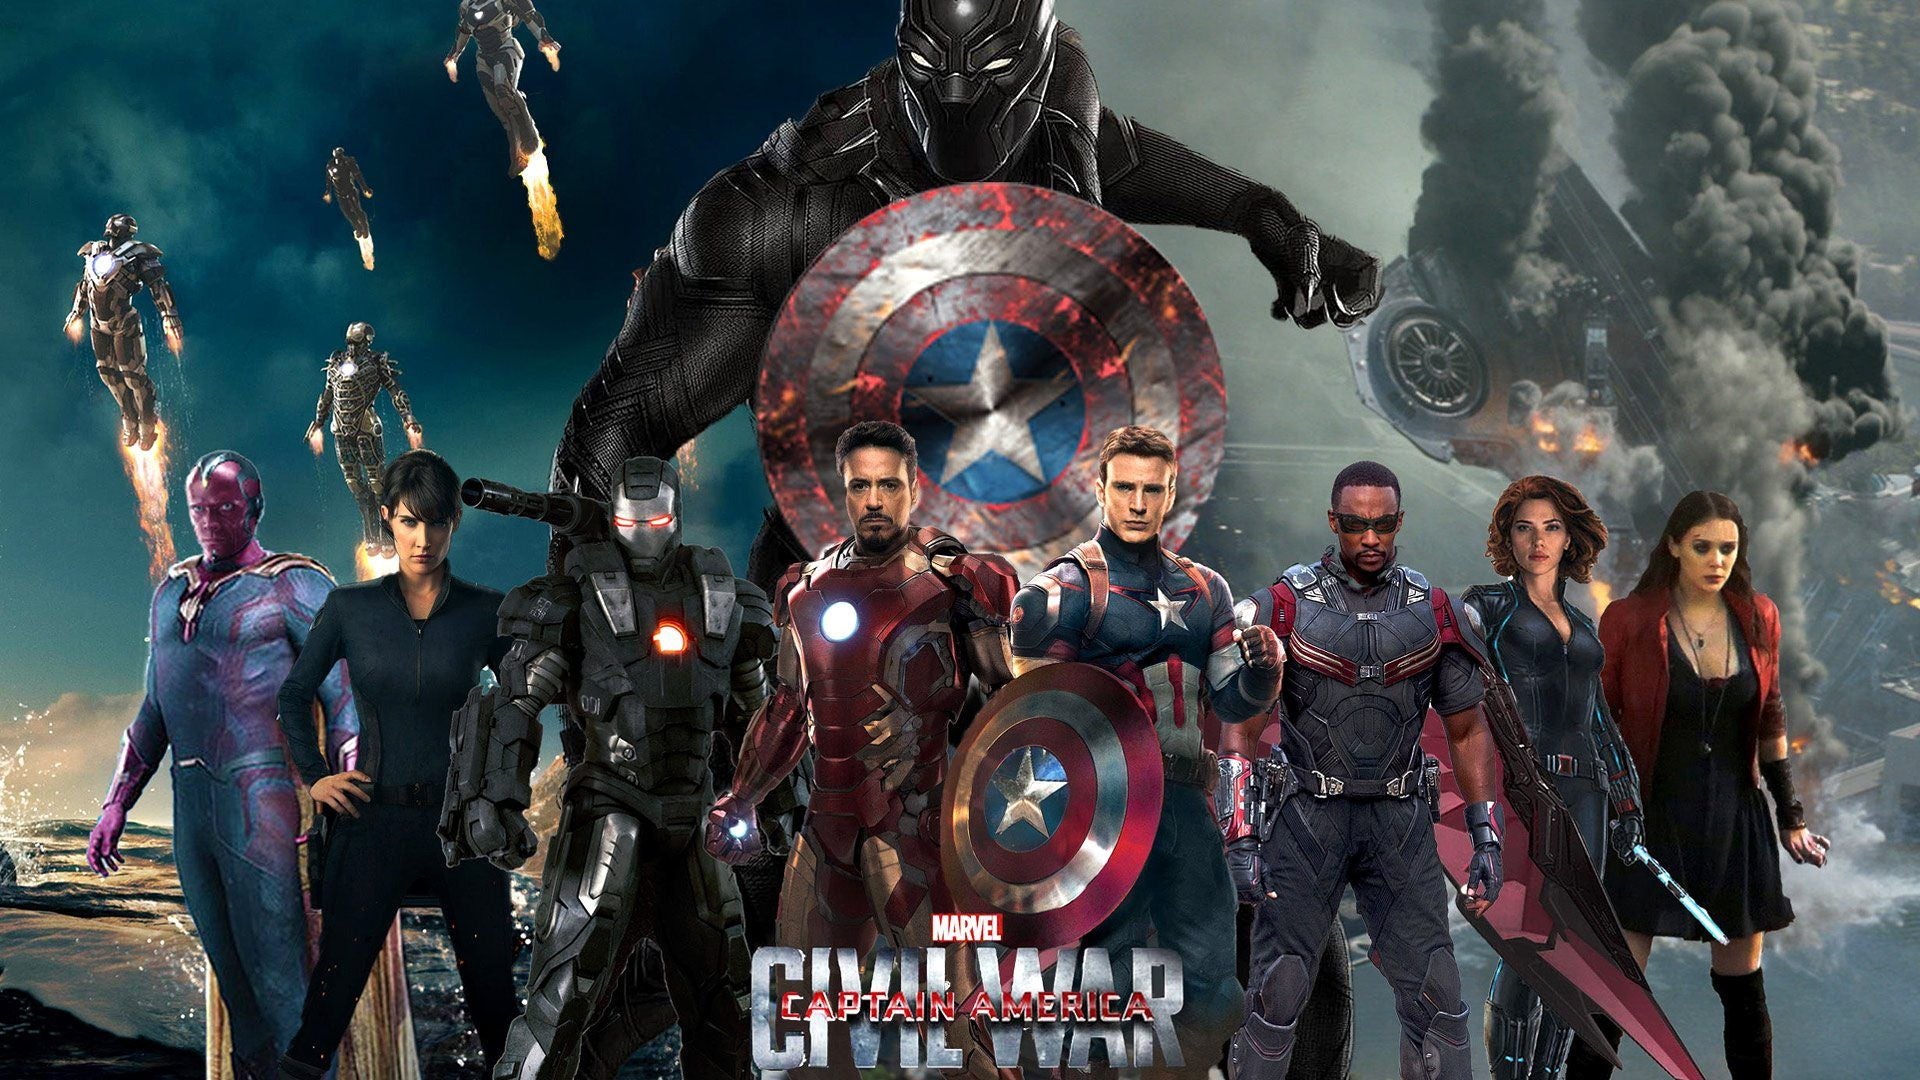 Marvel's Captain America: Civil War - Limited Edition SteelBook